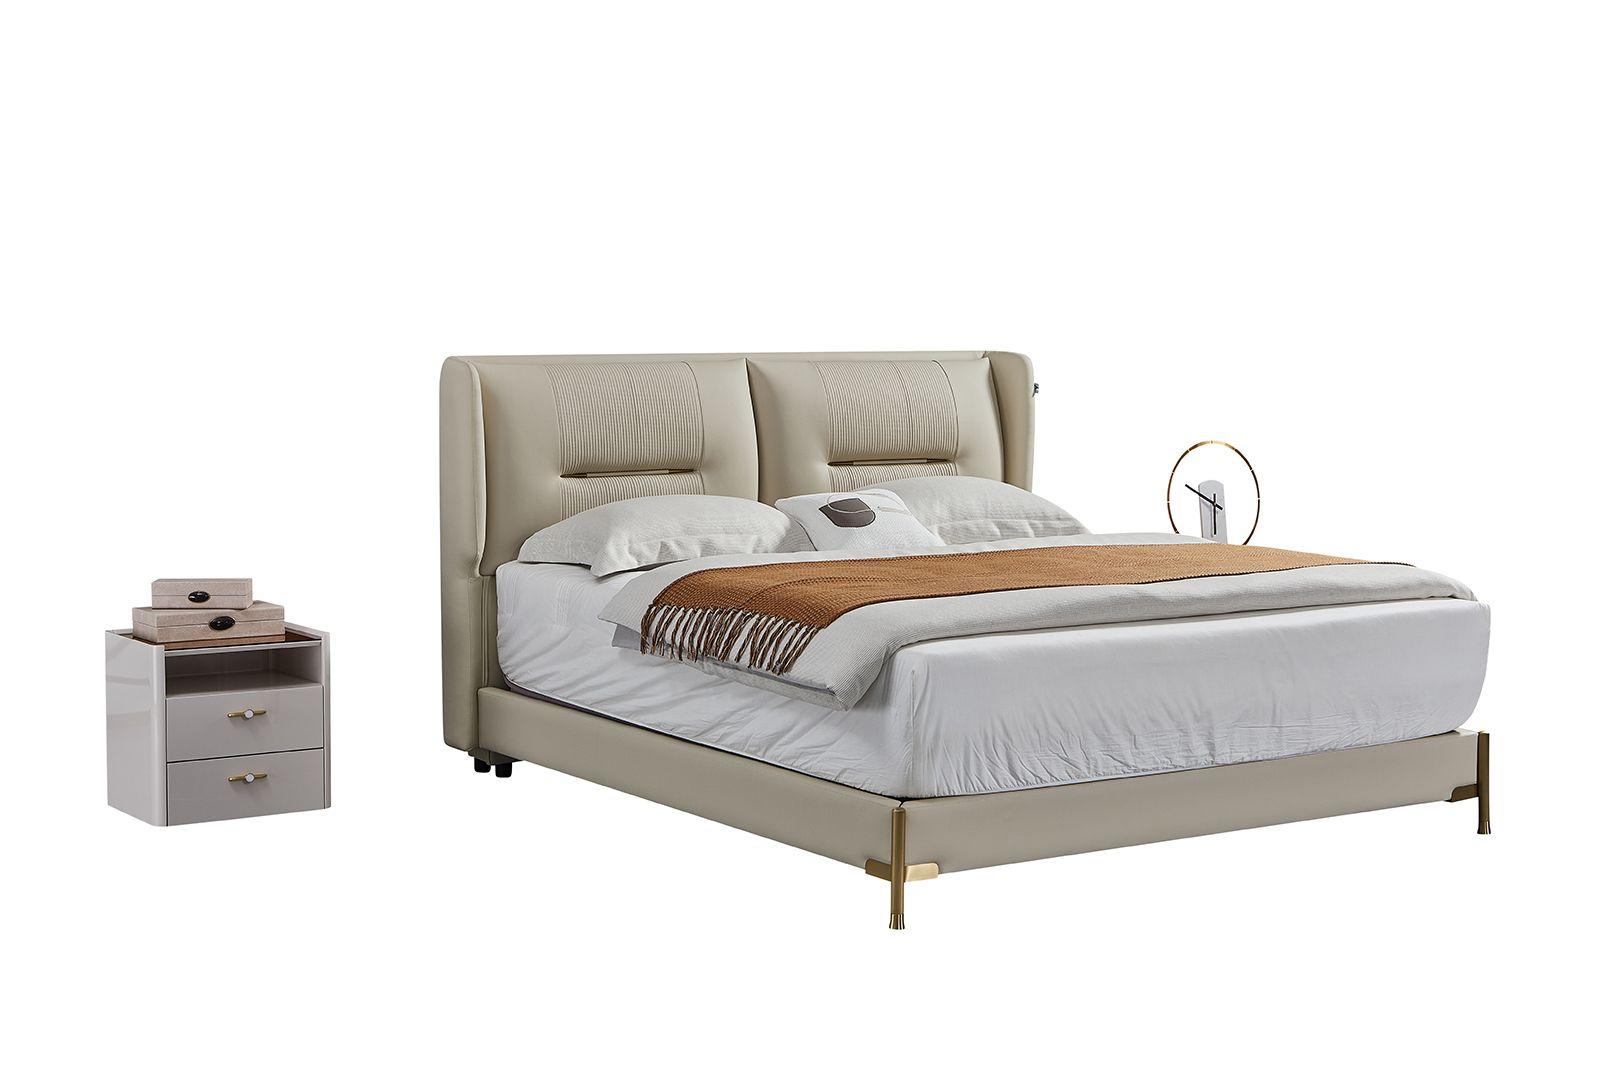 

    
American Eagle Furniture B-Y2012-Q / NS-Y2012 Platform Bedroom Set Gray B-Y2012-Q-3PC
